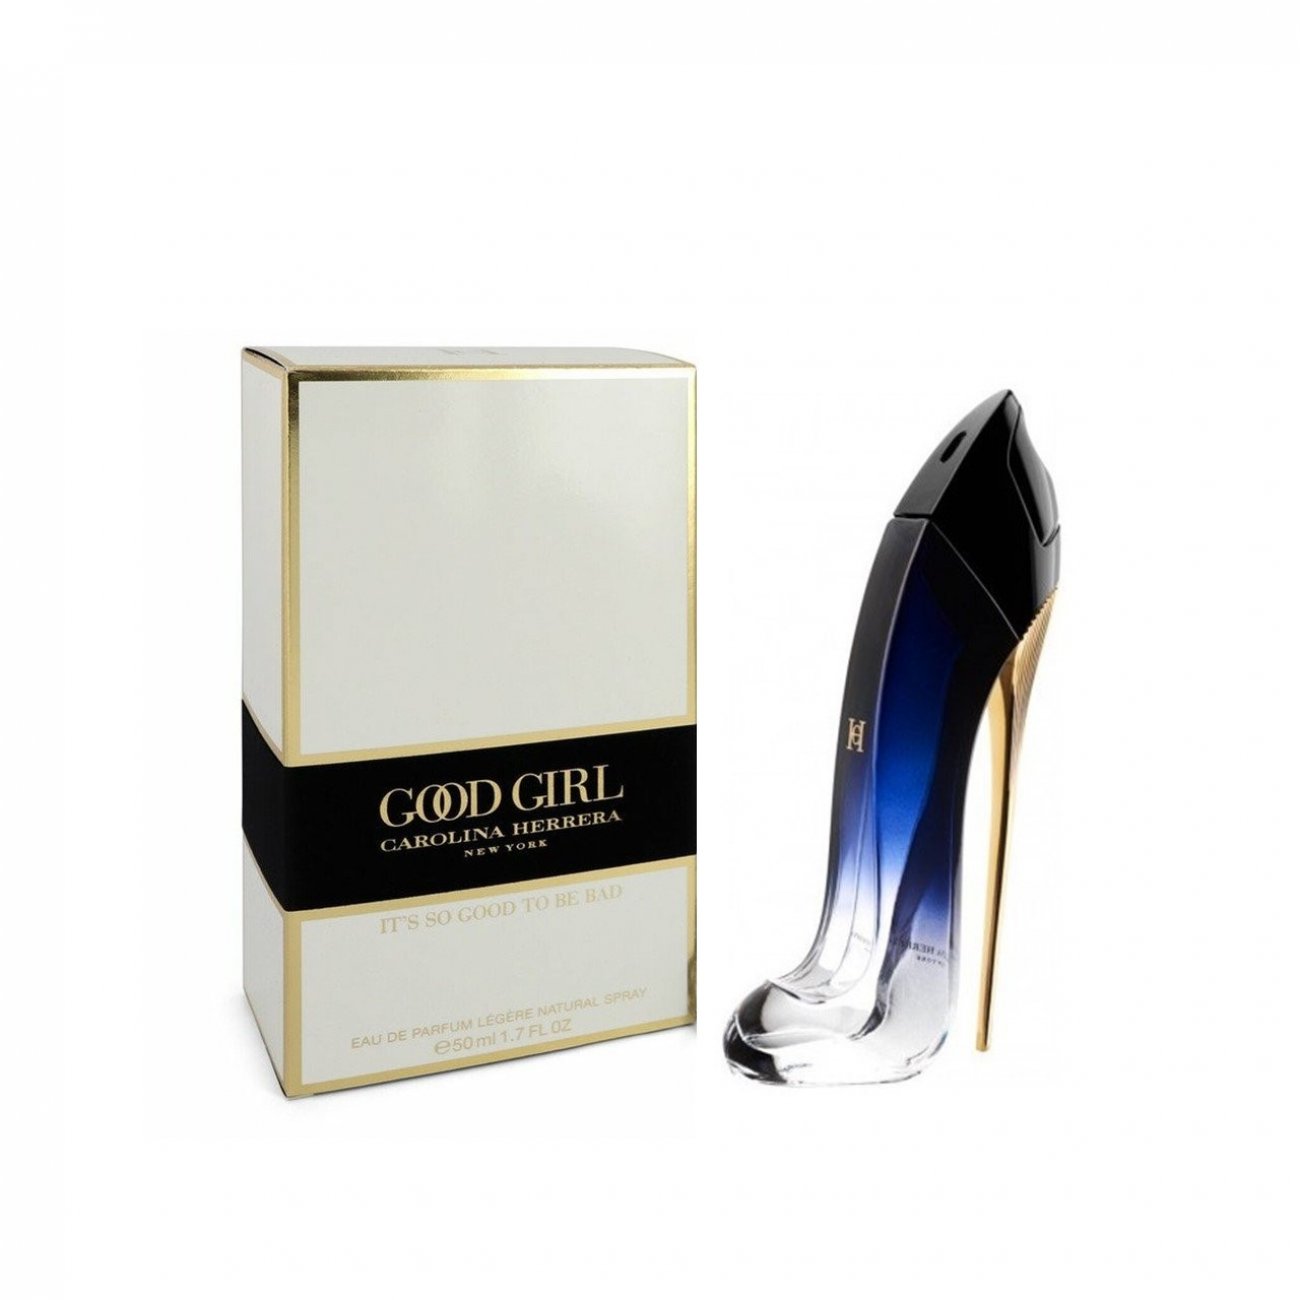 Very Good Girl Eau de Parfum Spray by Carolina Herrera - 1.7 oz